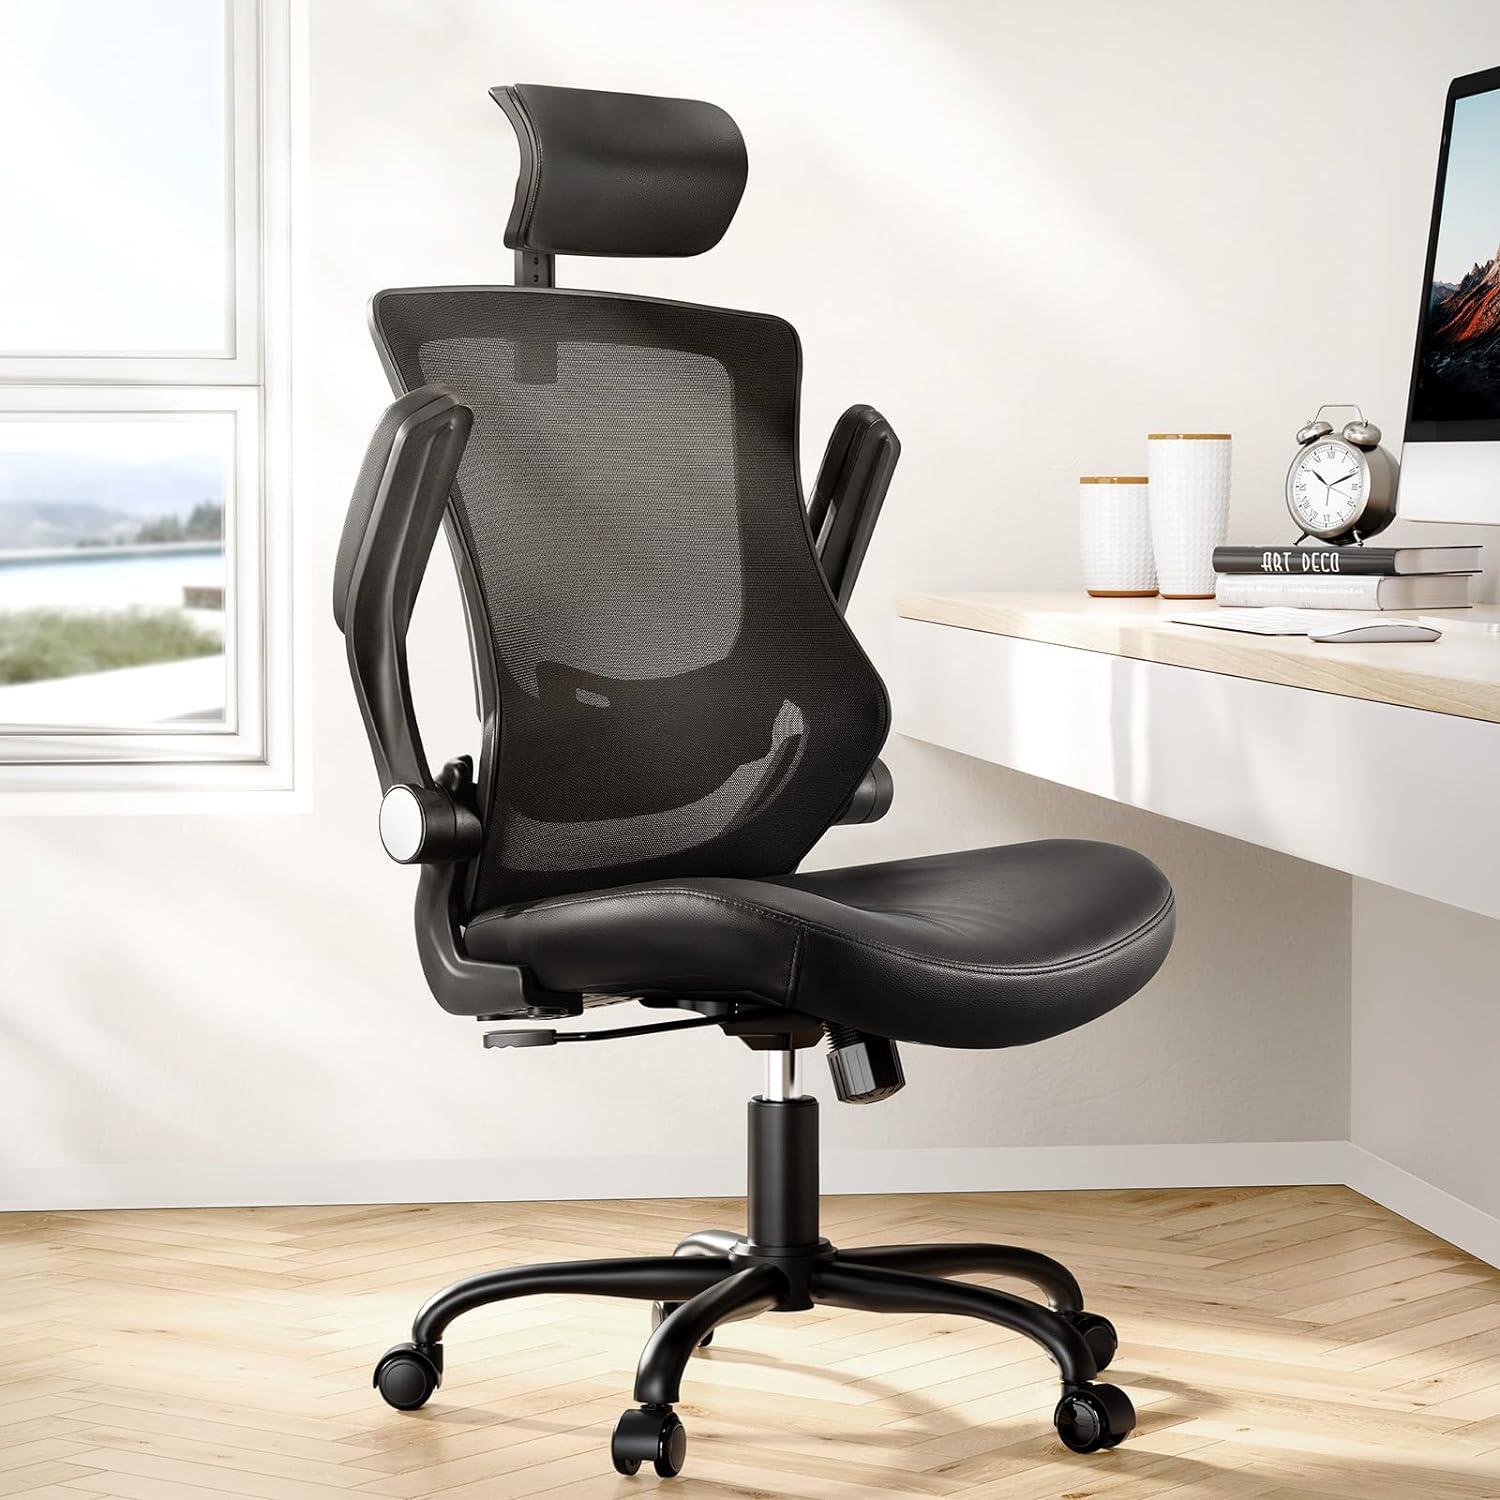 Marsail Office Chair Ergonomic Desk-Chair for $85.59 Shipped